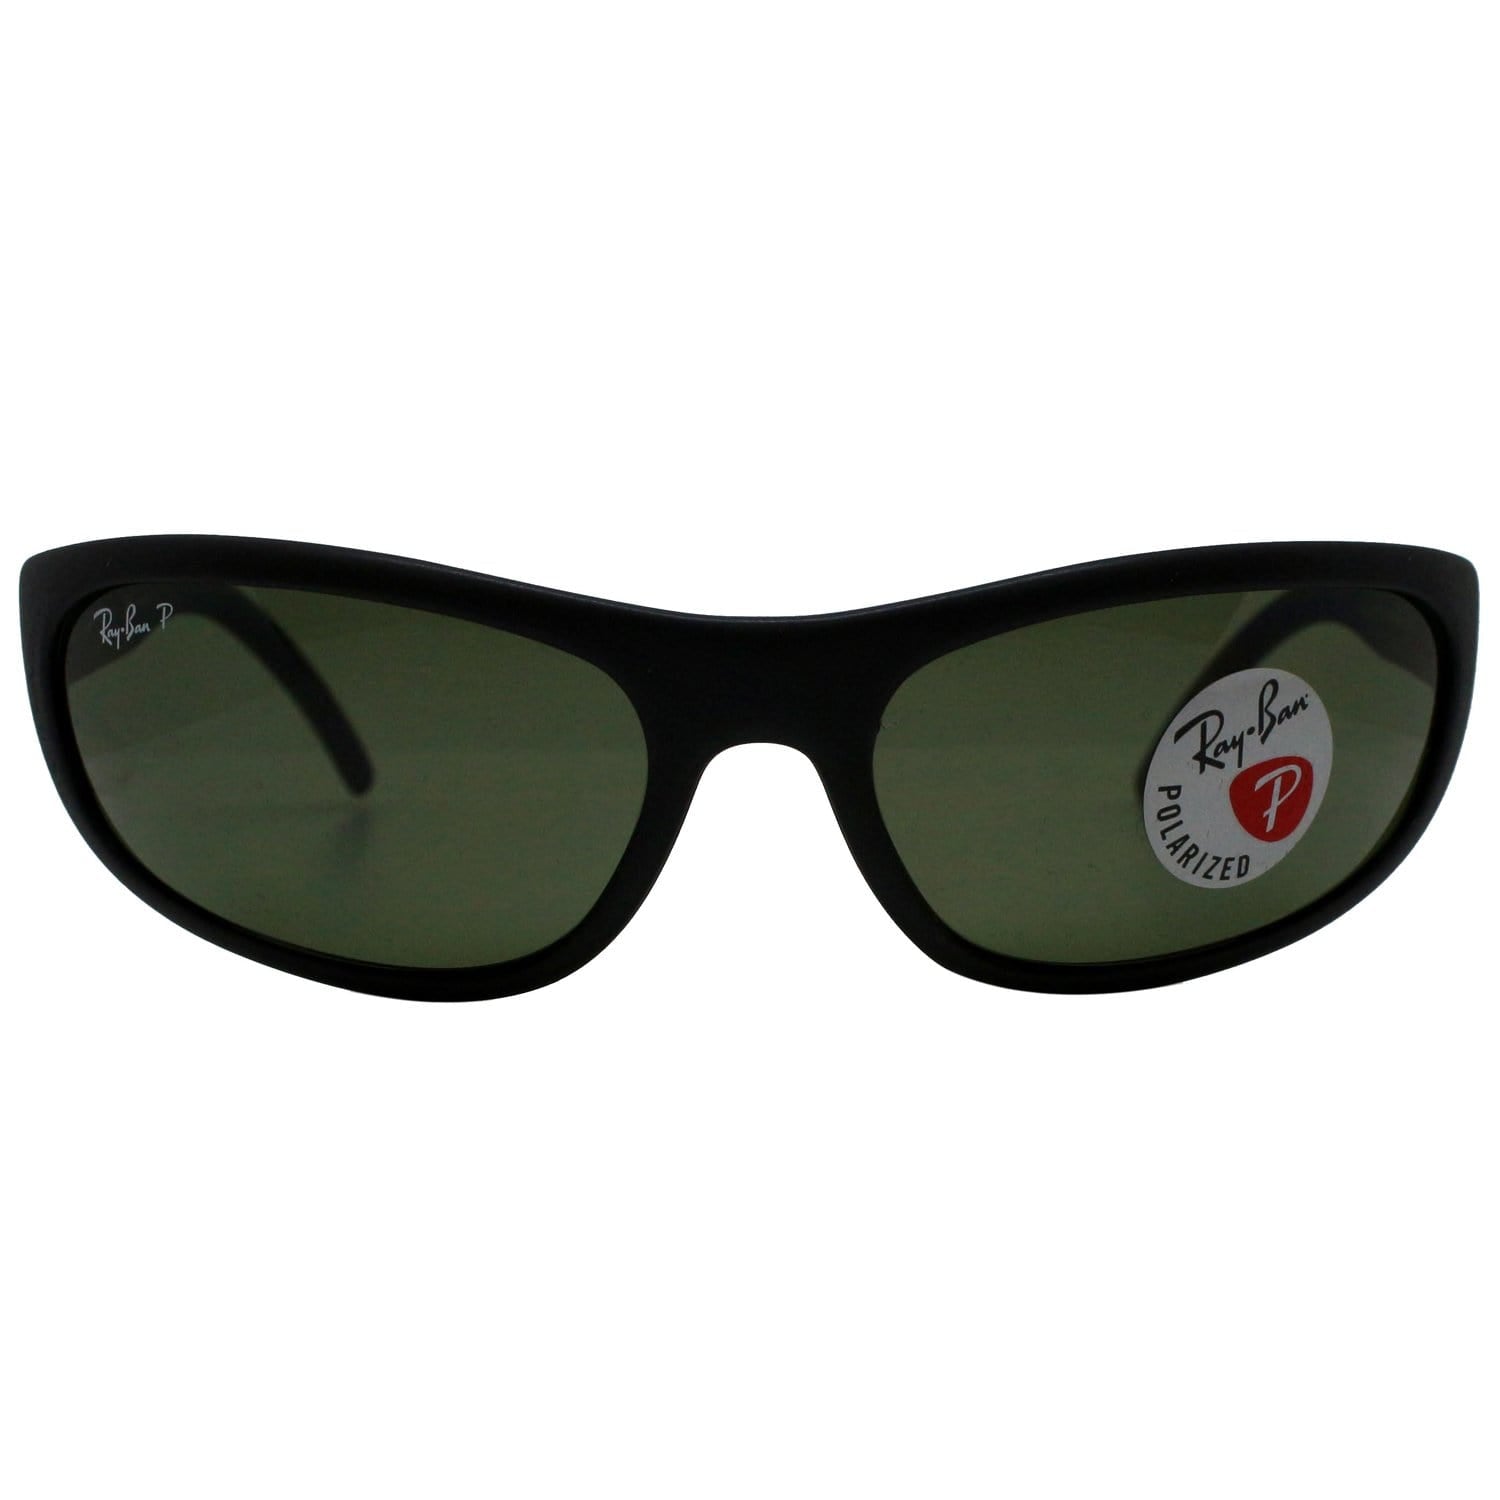 Ray Ban Predator Rb4033 601s48 Predator Sunglasses Green Polarized Len